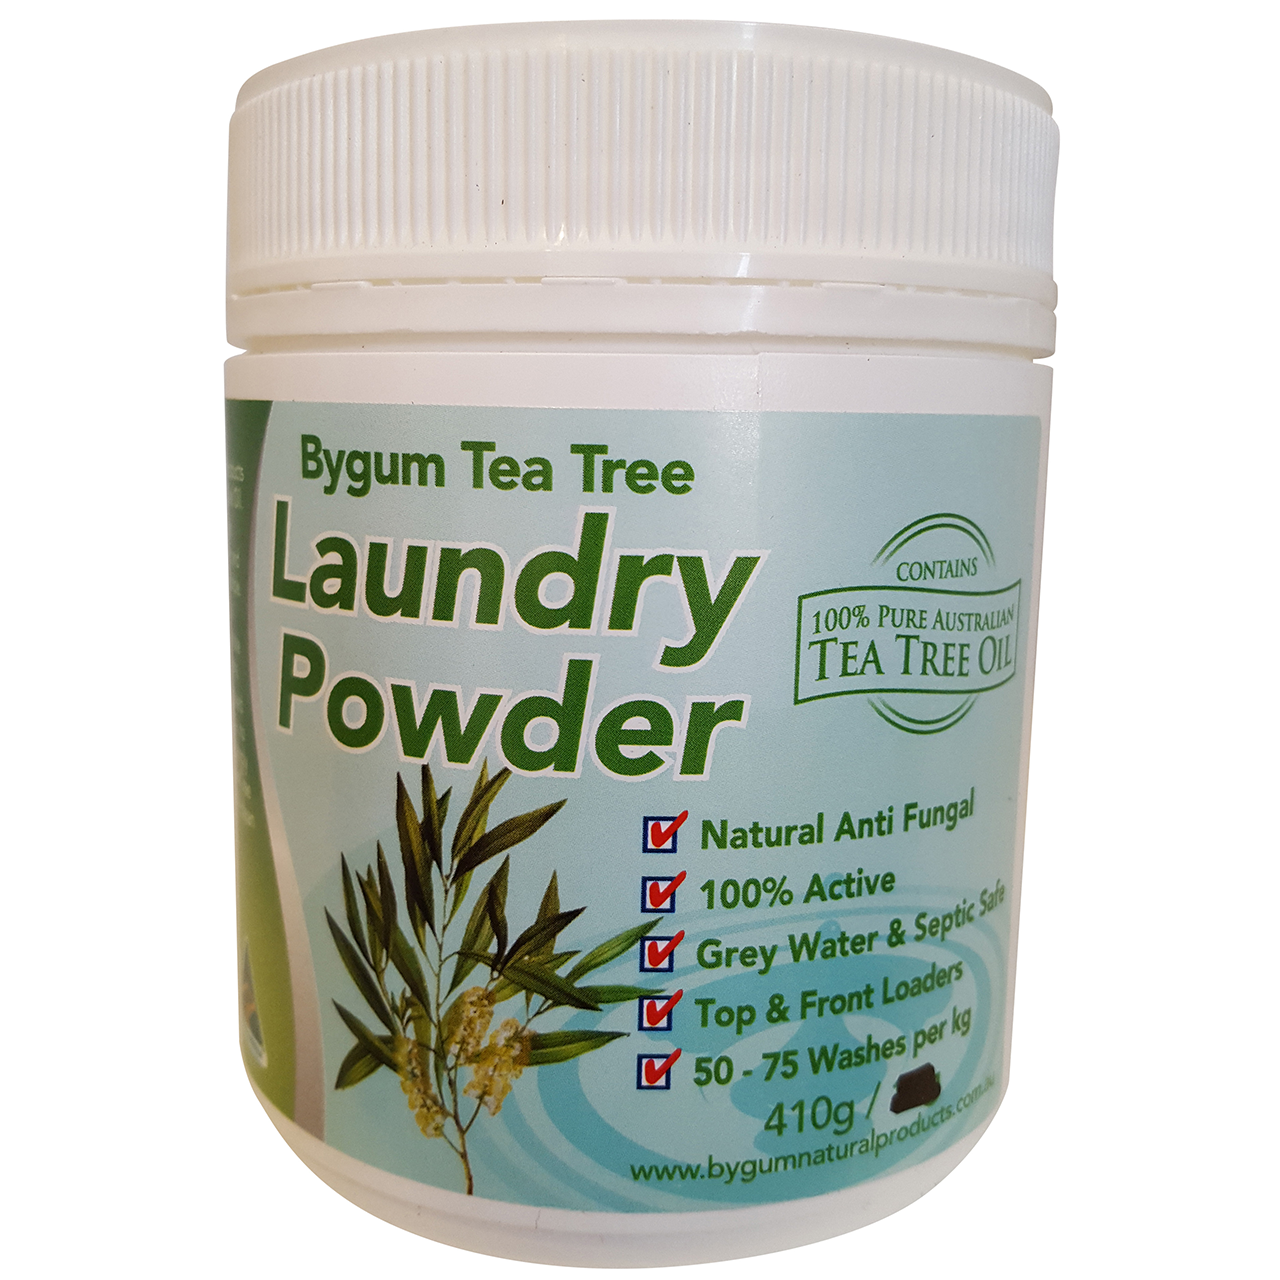 Bygum Tea Tree Laundry Powder 1kg